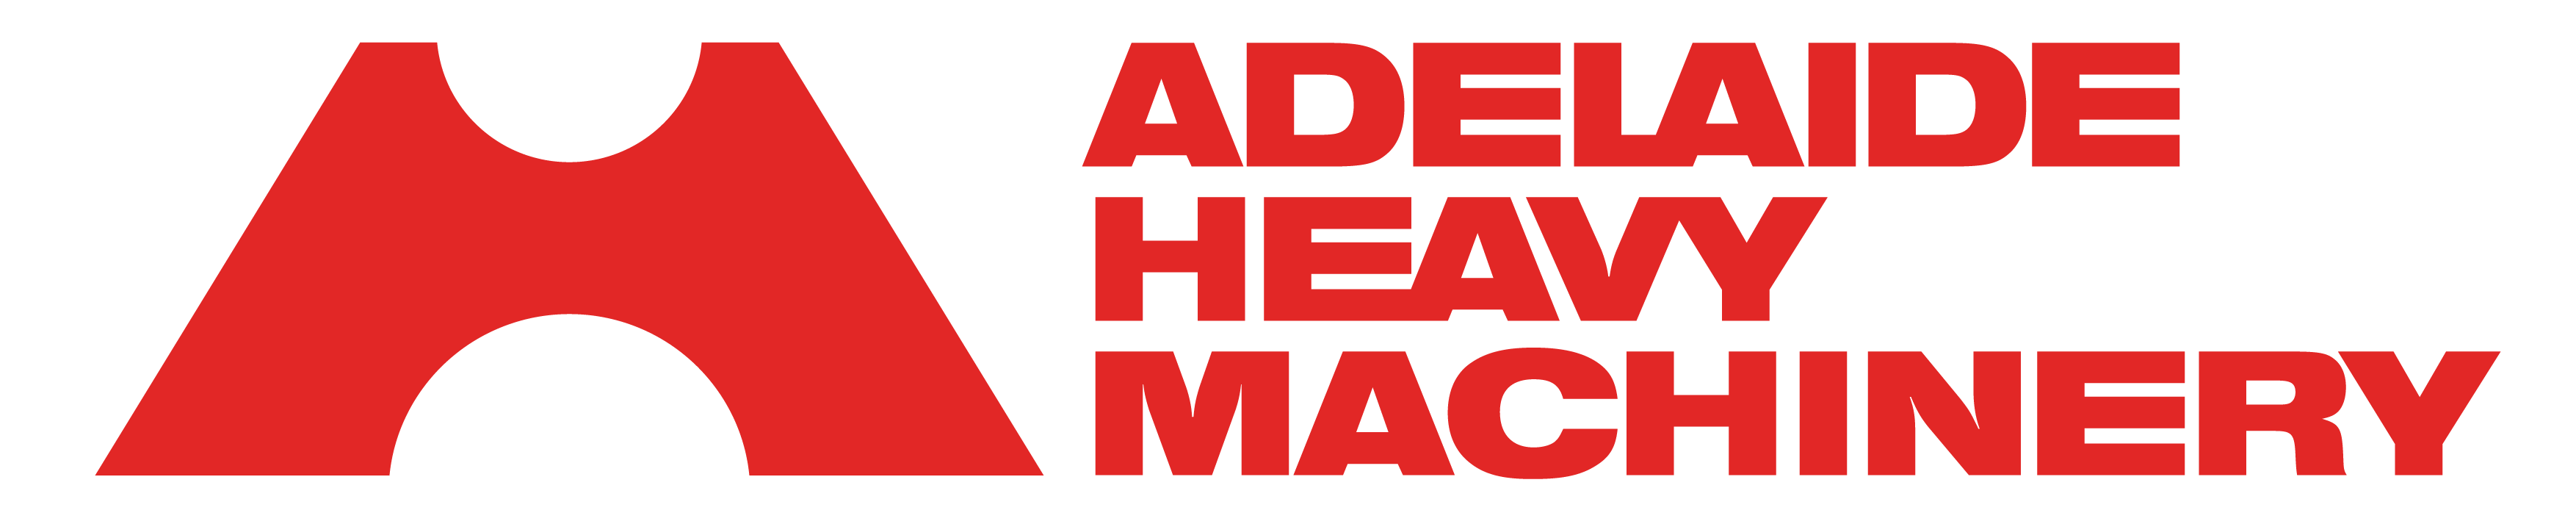 AdelaideHeavyMachinery_Logo_Red_f